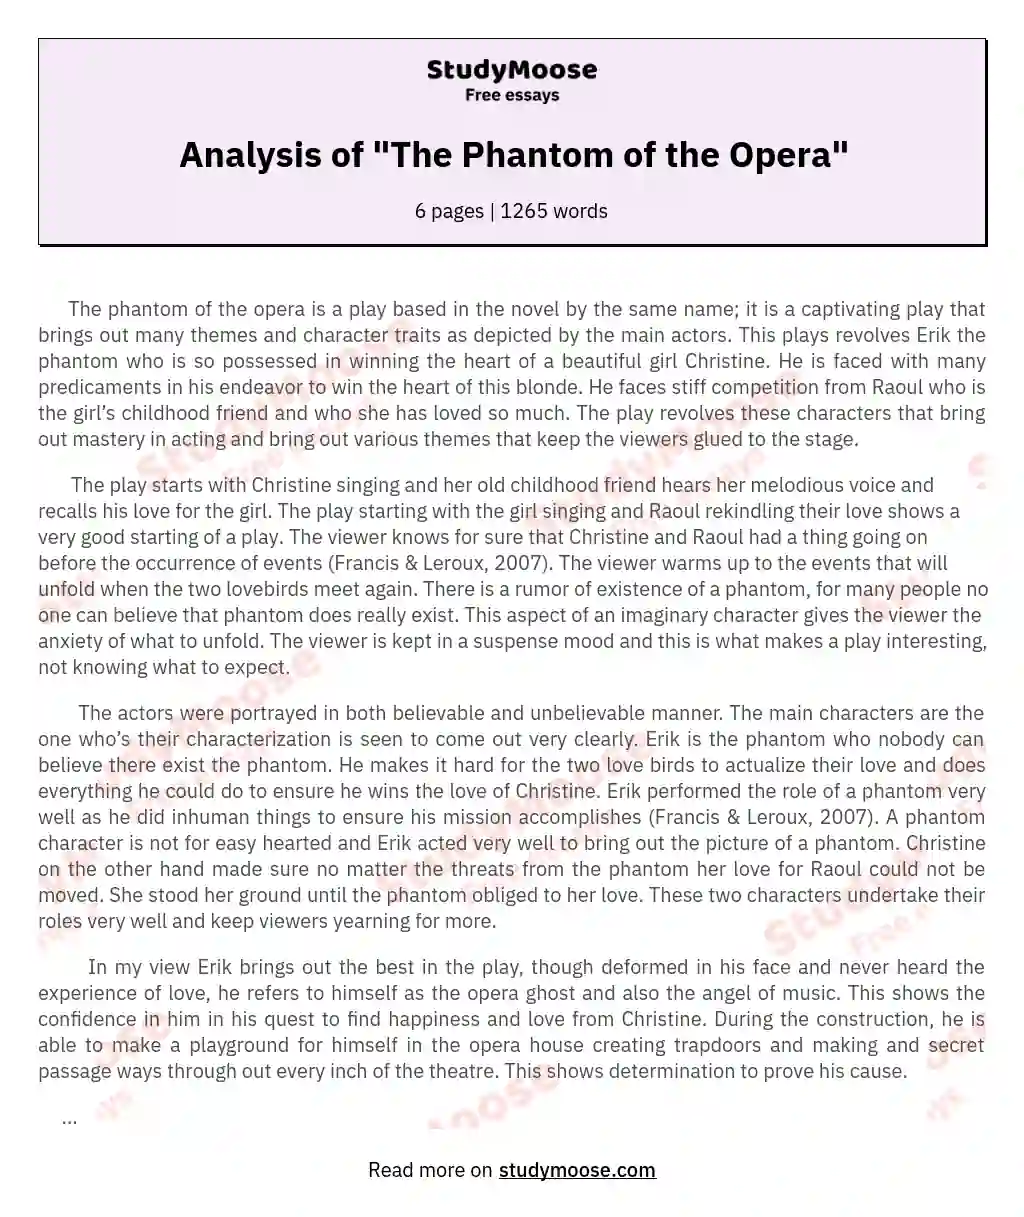 Analysis of "The Phantom of the Opera" essay